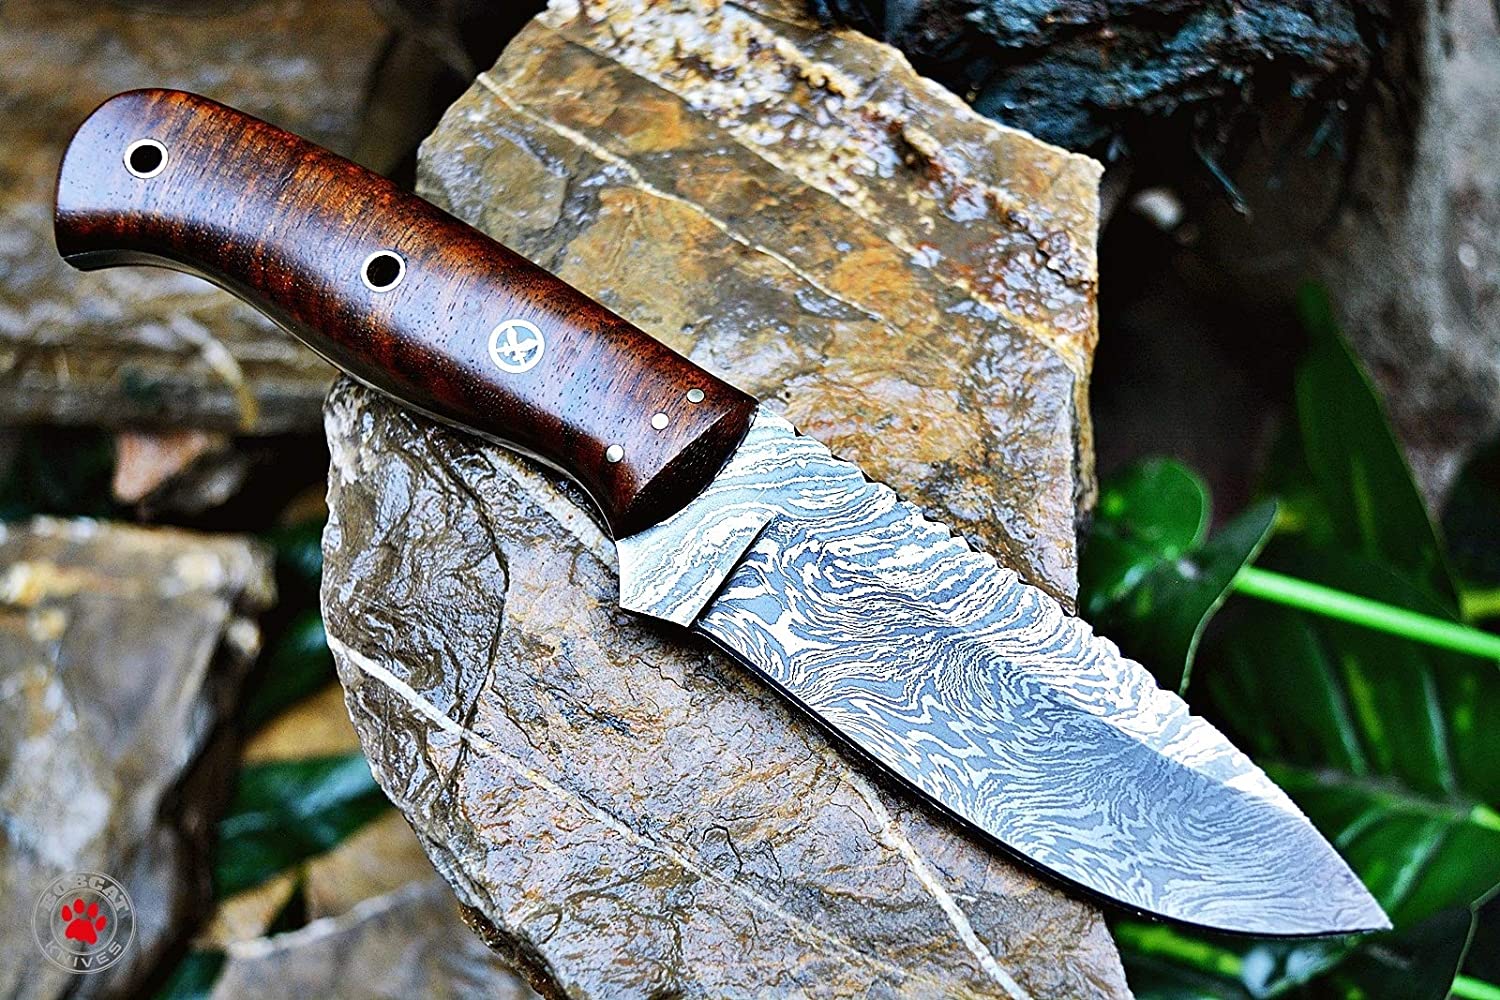 BIGCAT ROAR Handmade Damascus Steel Bushcraft Survival Knife with Leather Sheath, EDC Skinner Knife, Little Champ